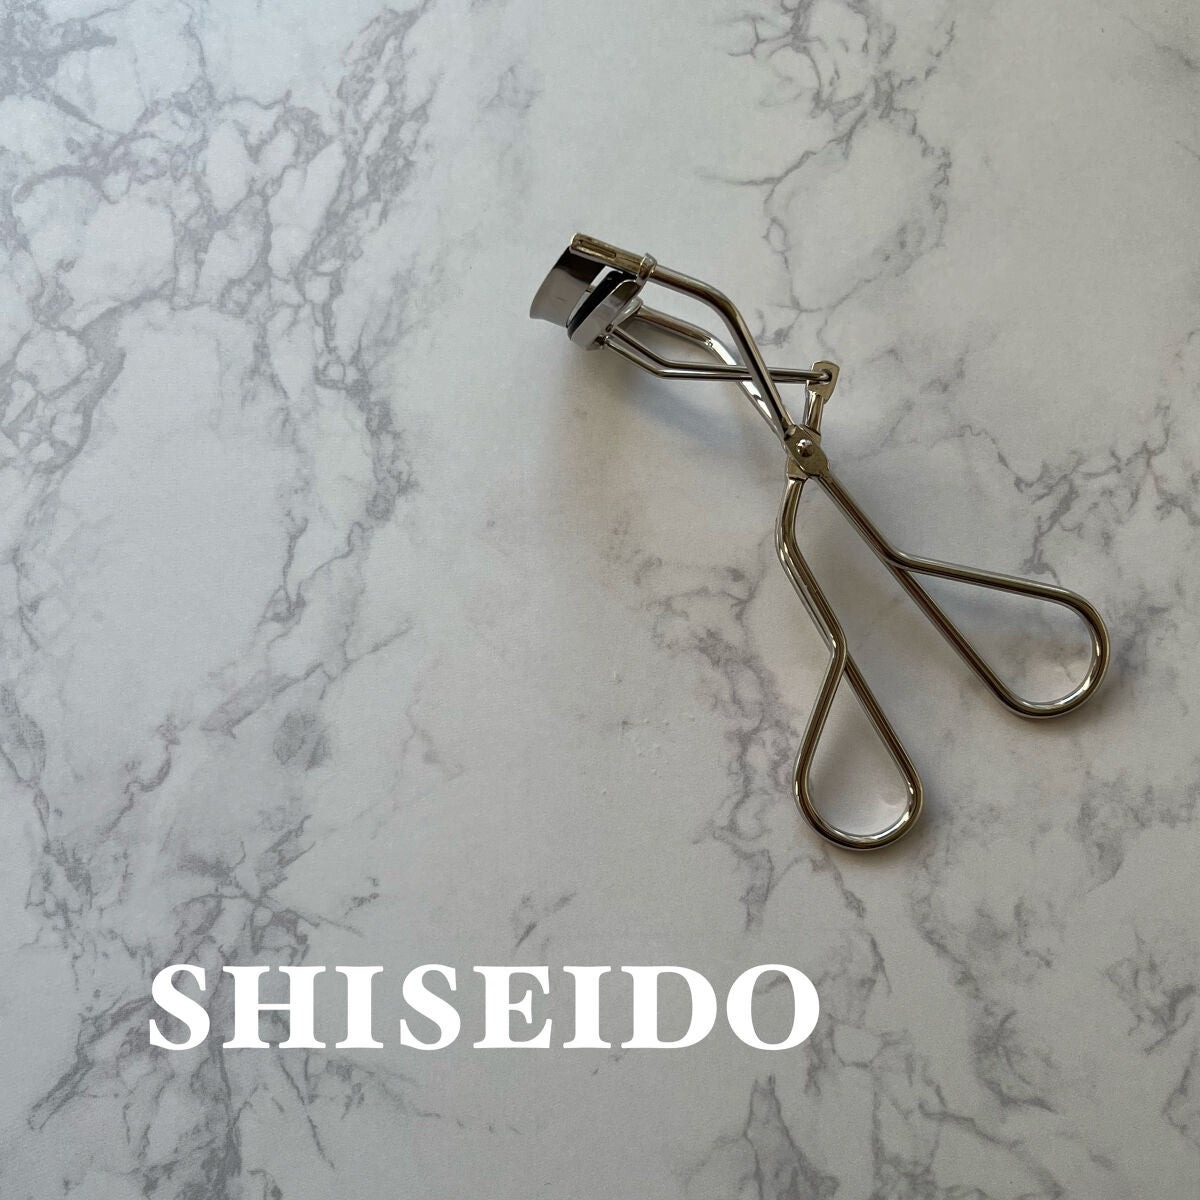 kep mi SHISEIDO Eyelash Curler 213 review